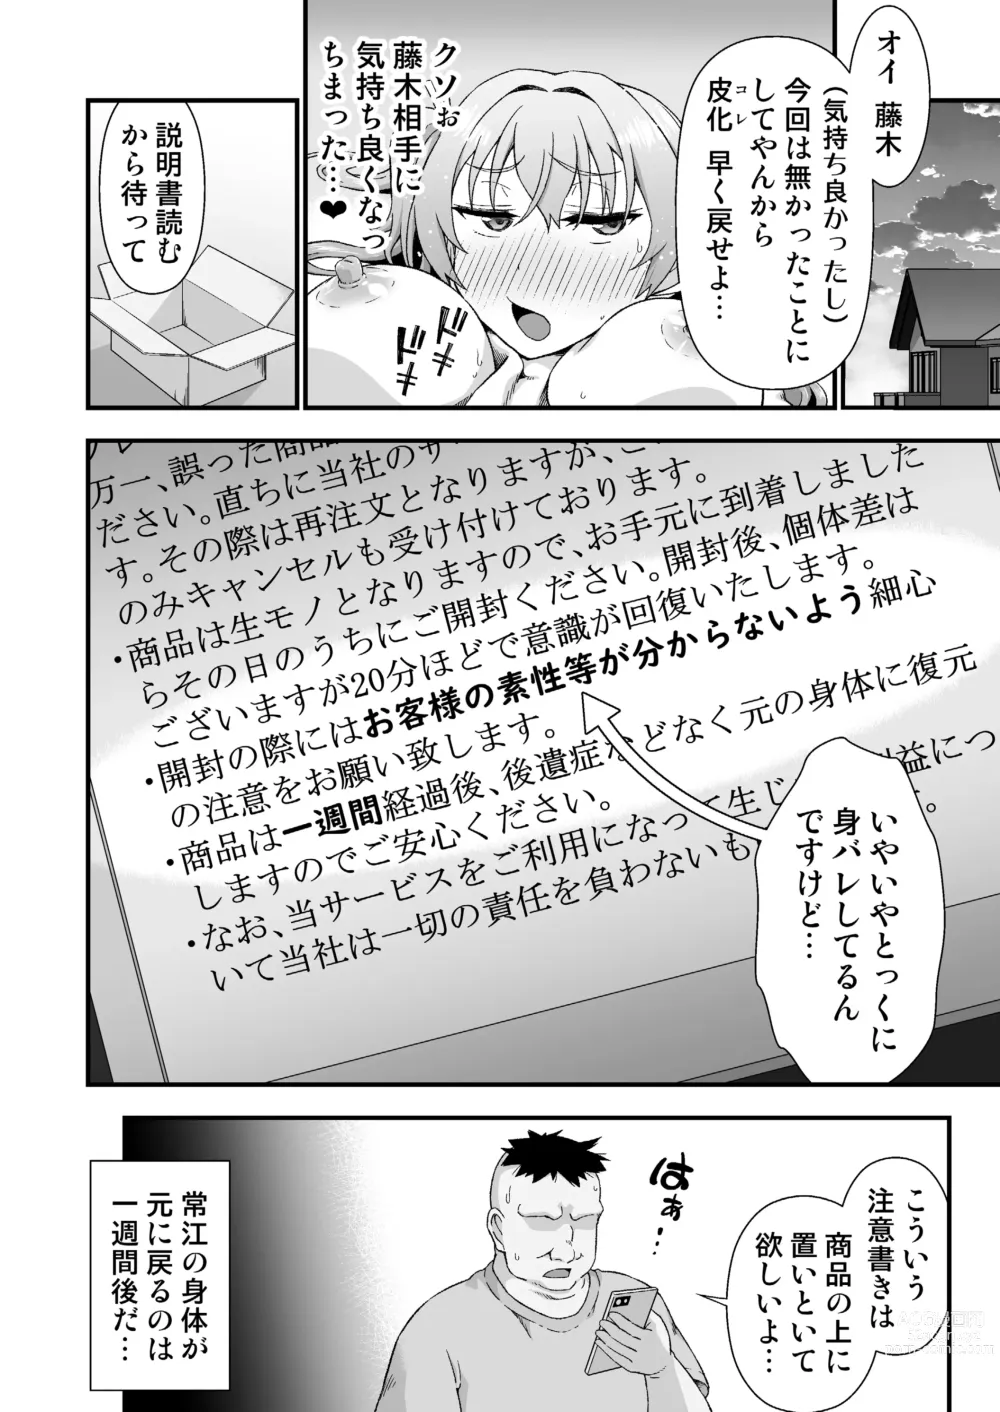 Page 4 of doujinshi Kawa-ka daiko o kawari